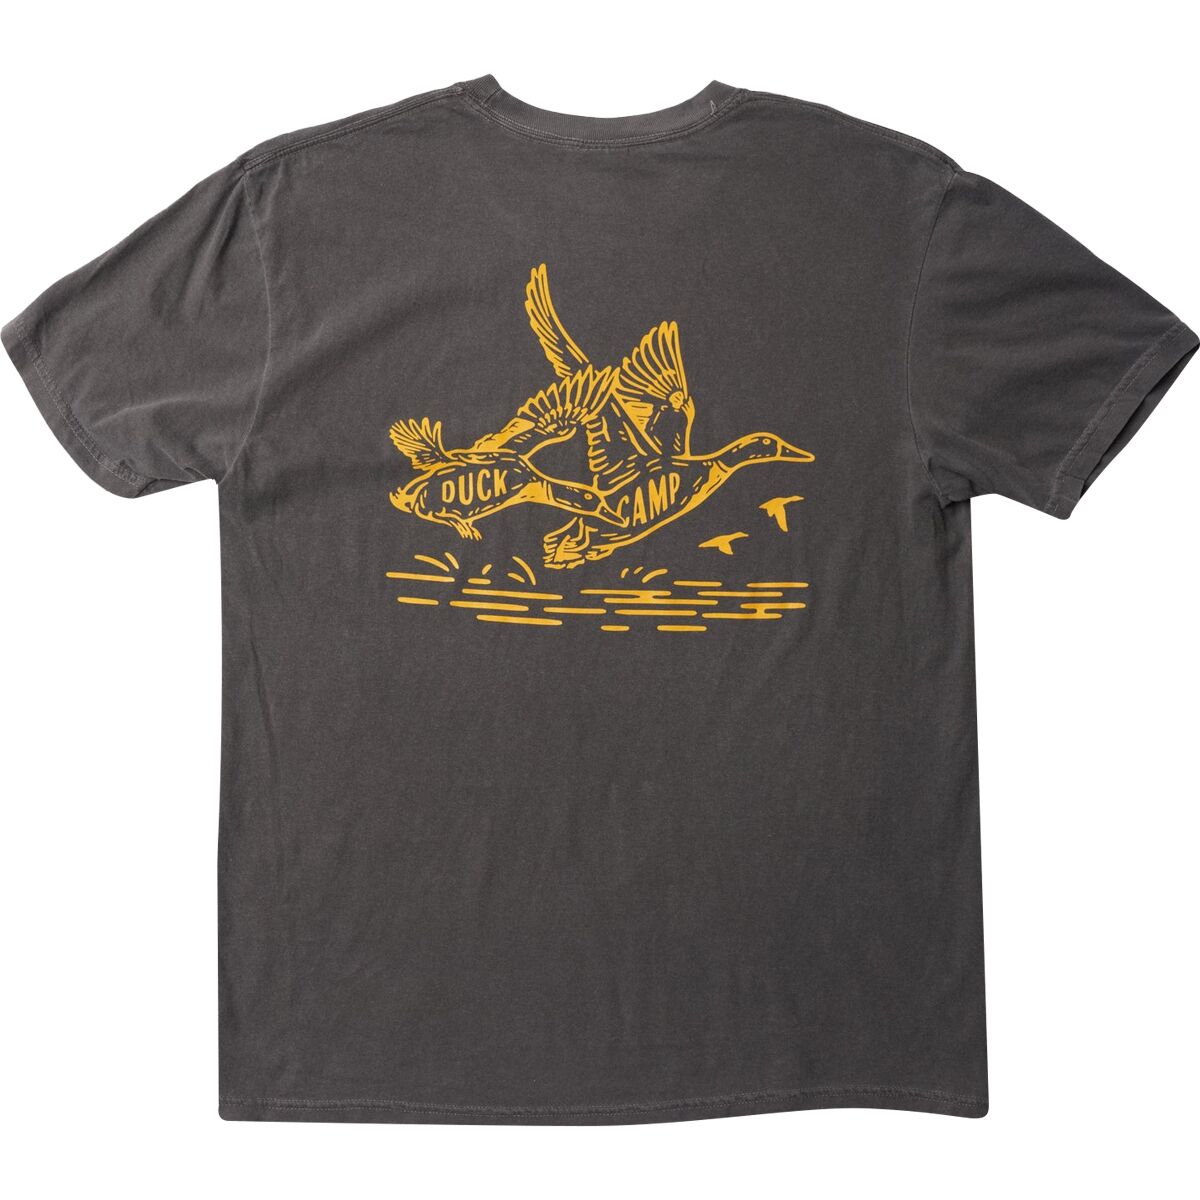 Duck Camp Flight of the Mallards Graphic T-Shirt - Men's